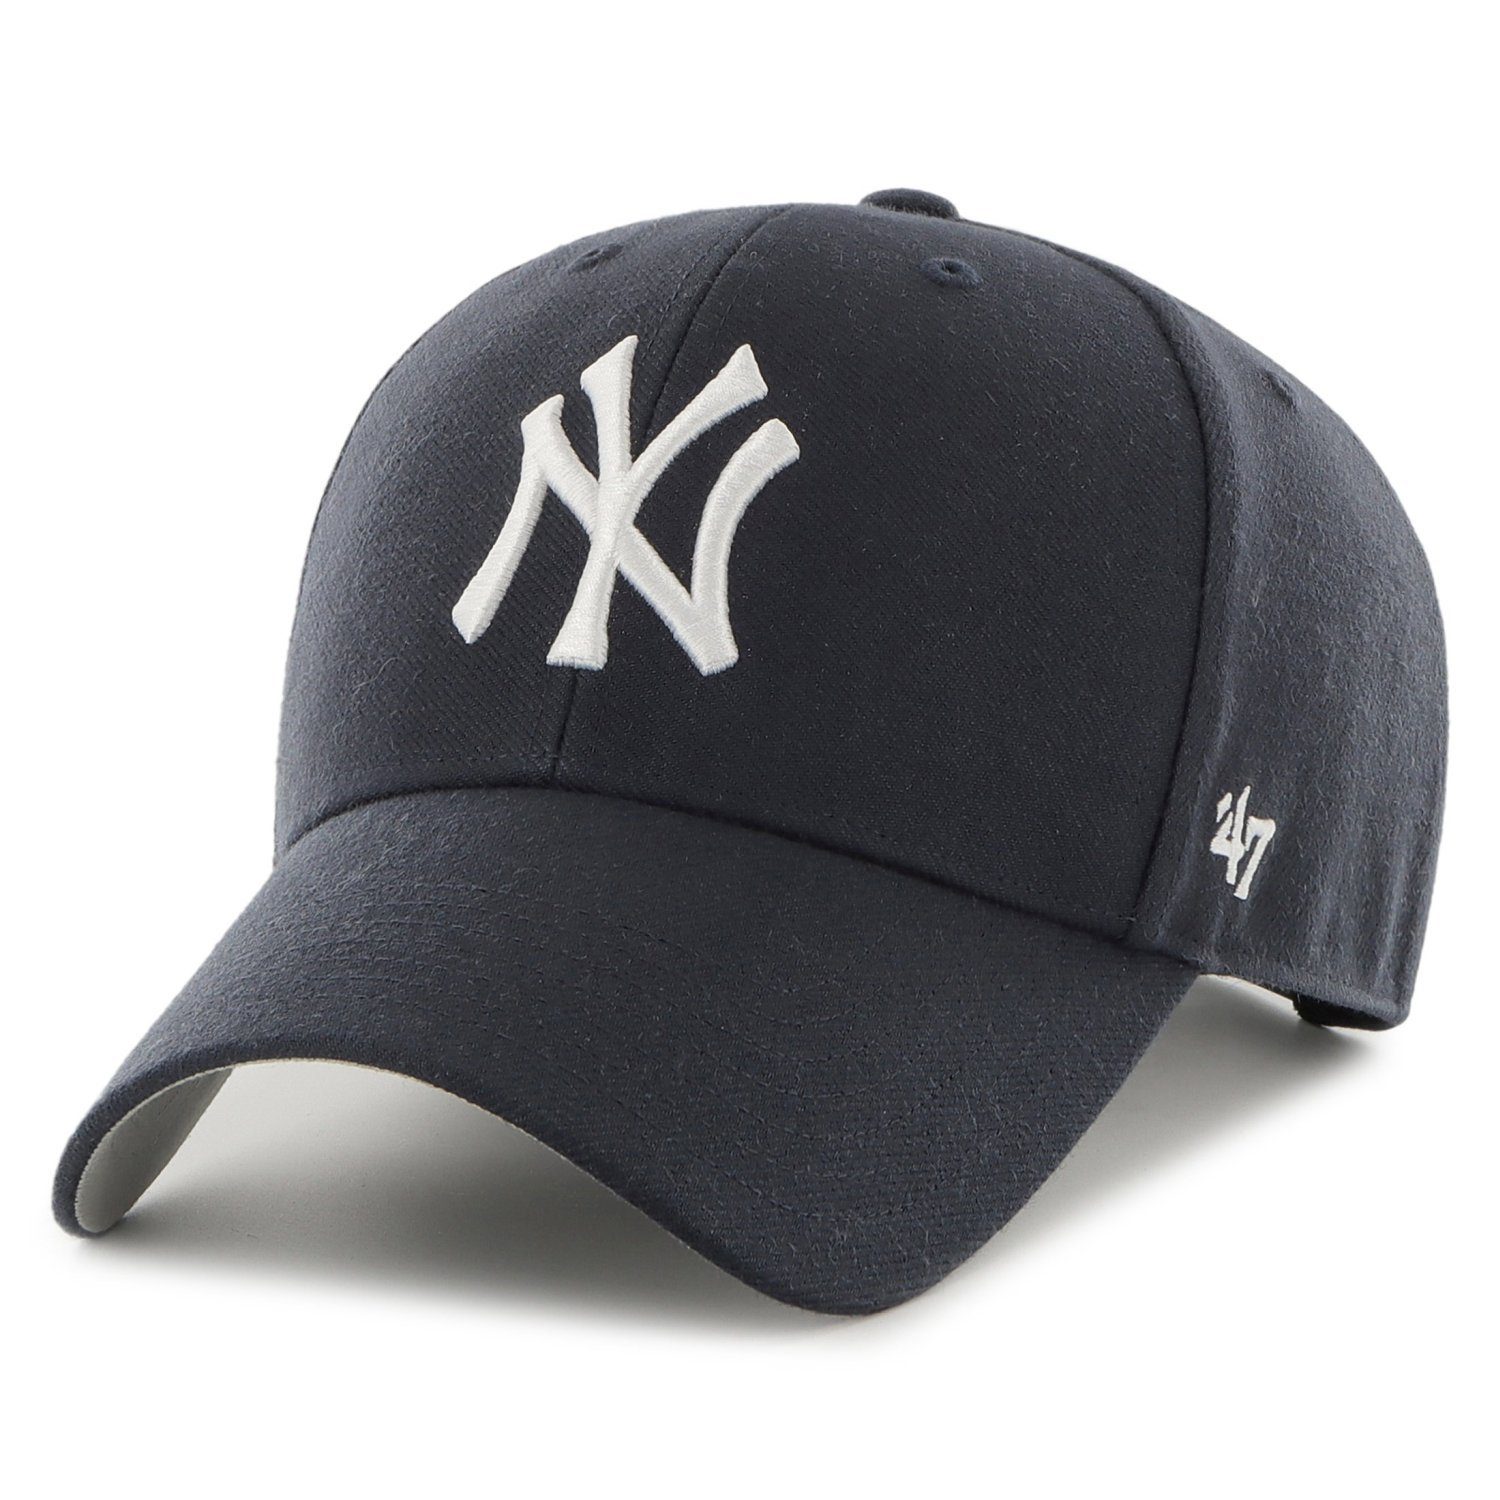 x27;47 Brand Snapback Cap New Yankees WORLD York SERIES